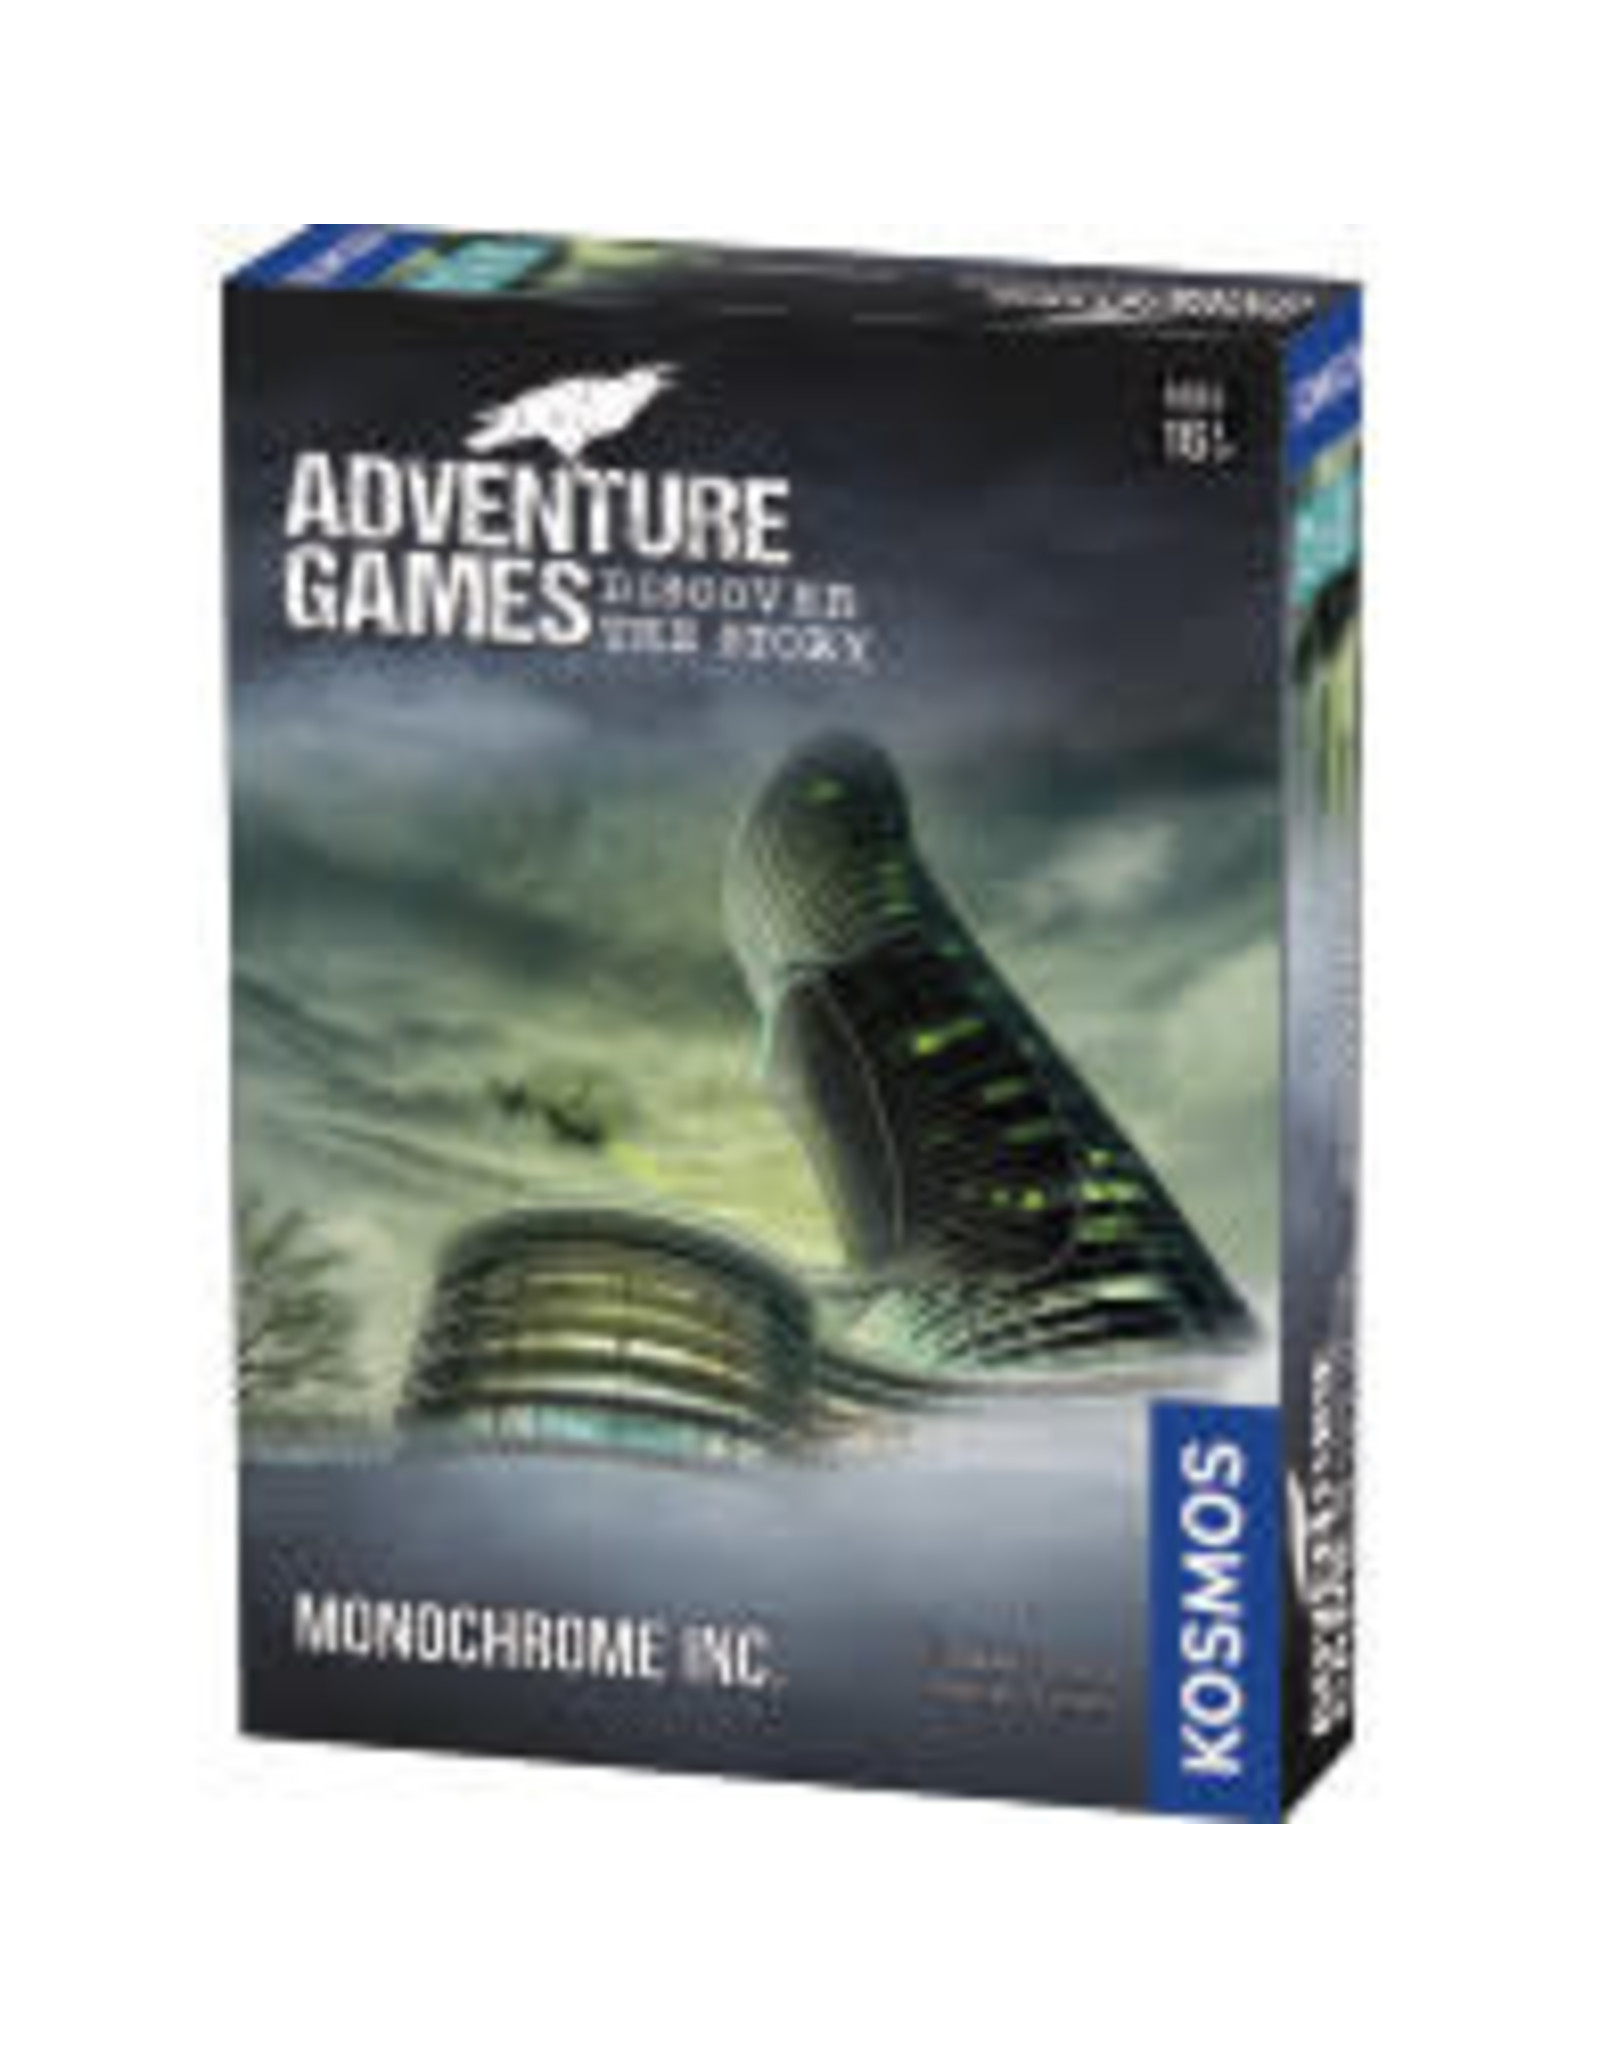 THAMES & KOSMOS Adventure Games: Monochrome Inc.